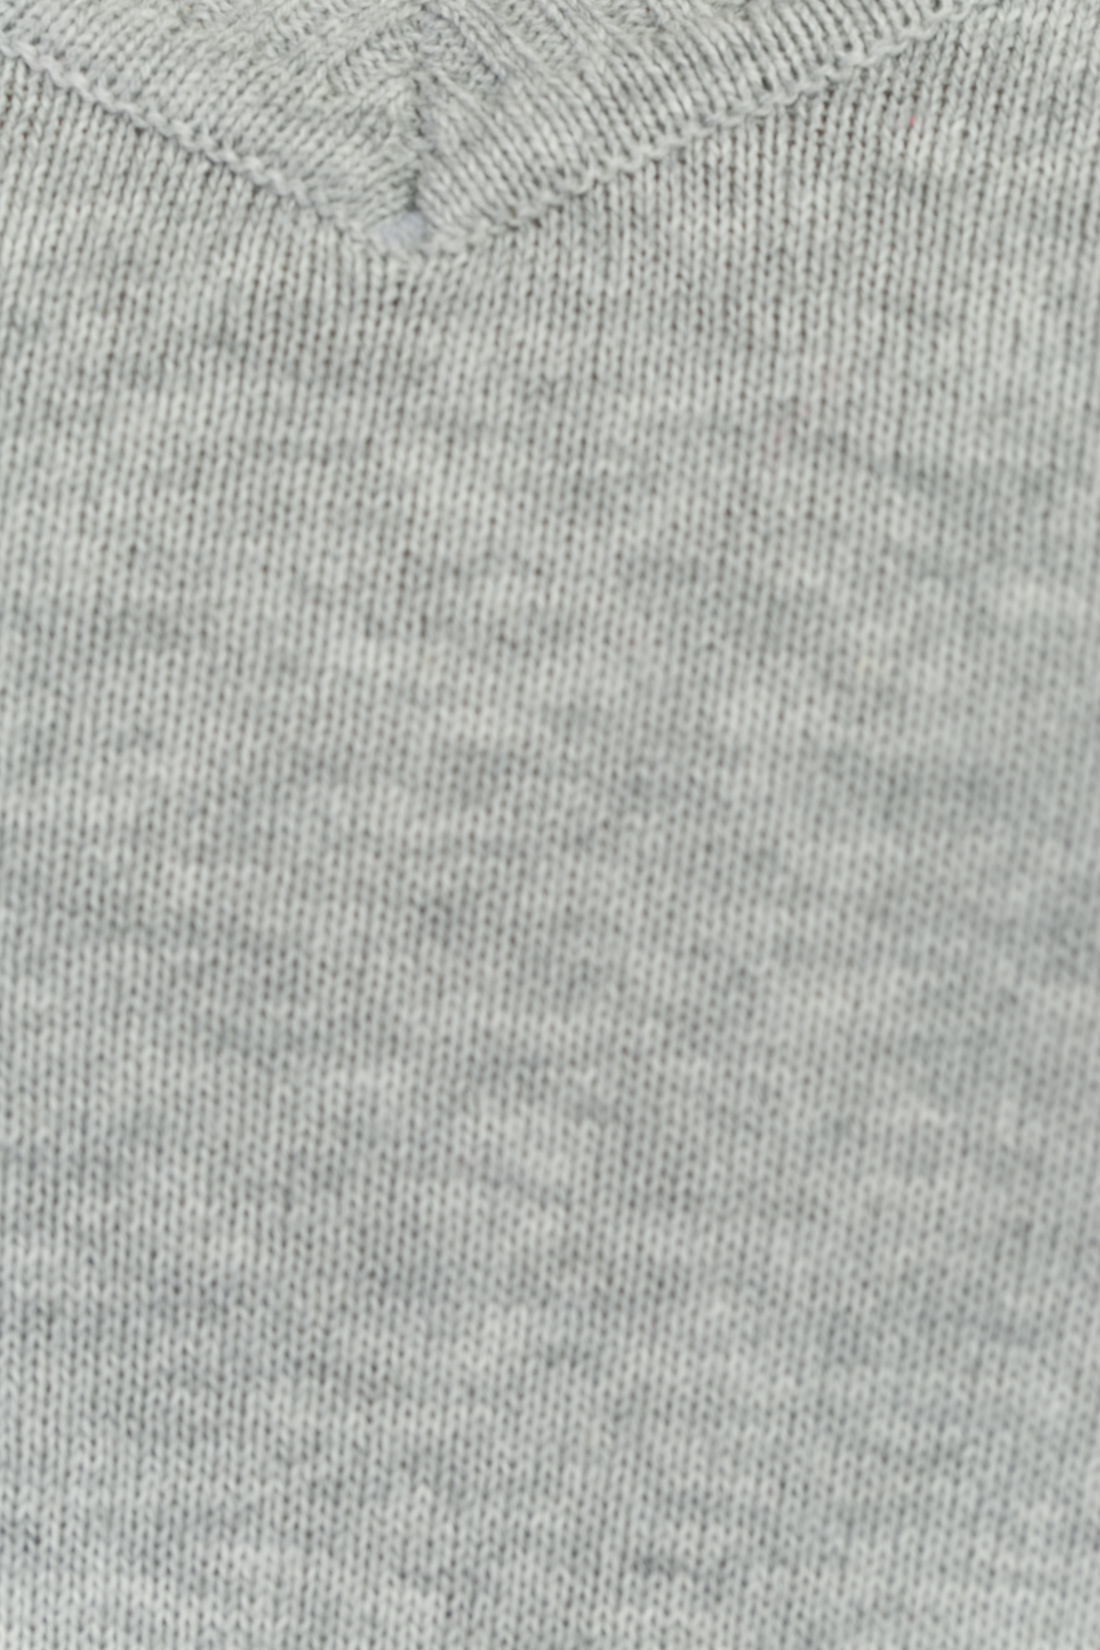 Базовый пуловер из хлопка (арт. baon B137201), размер XXL, цвет silver melange#серый Базовый пуловер из хлопка (арт. baon B137201) - фото 3